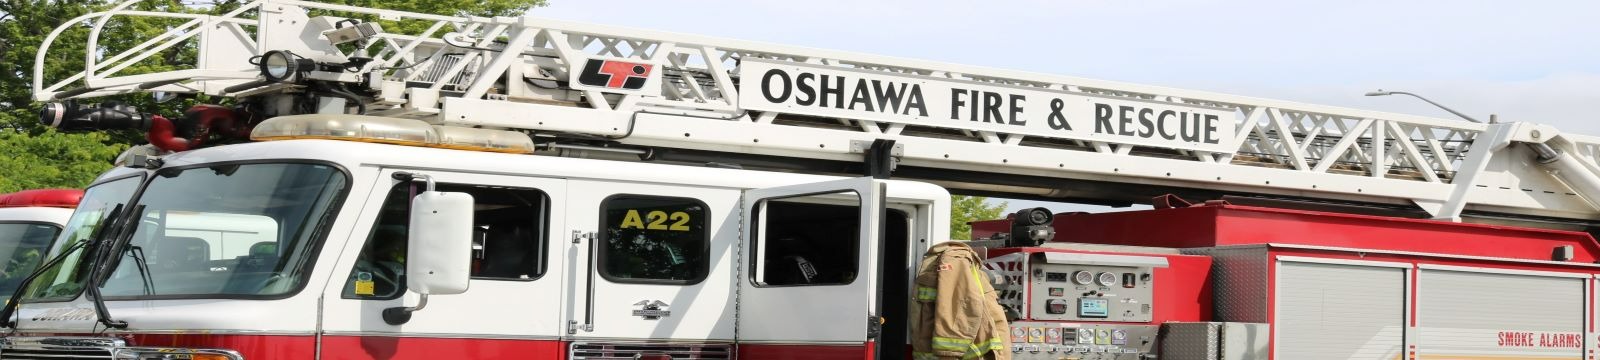 Oshawa Fire Services search and rescue truck.